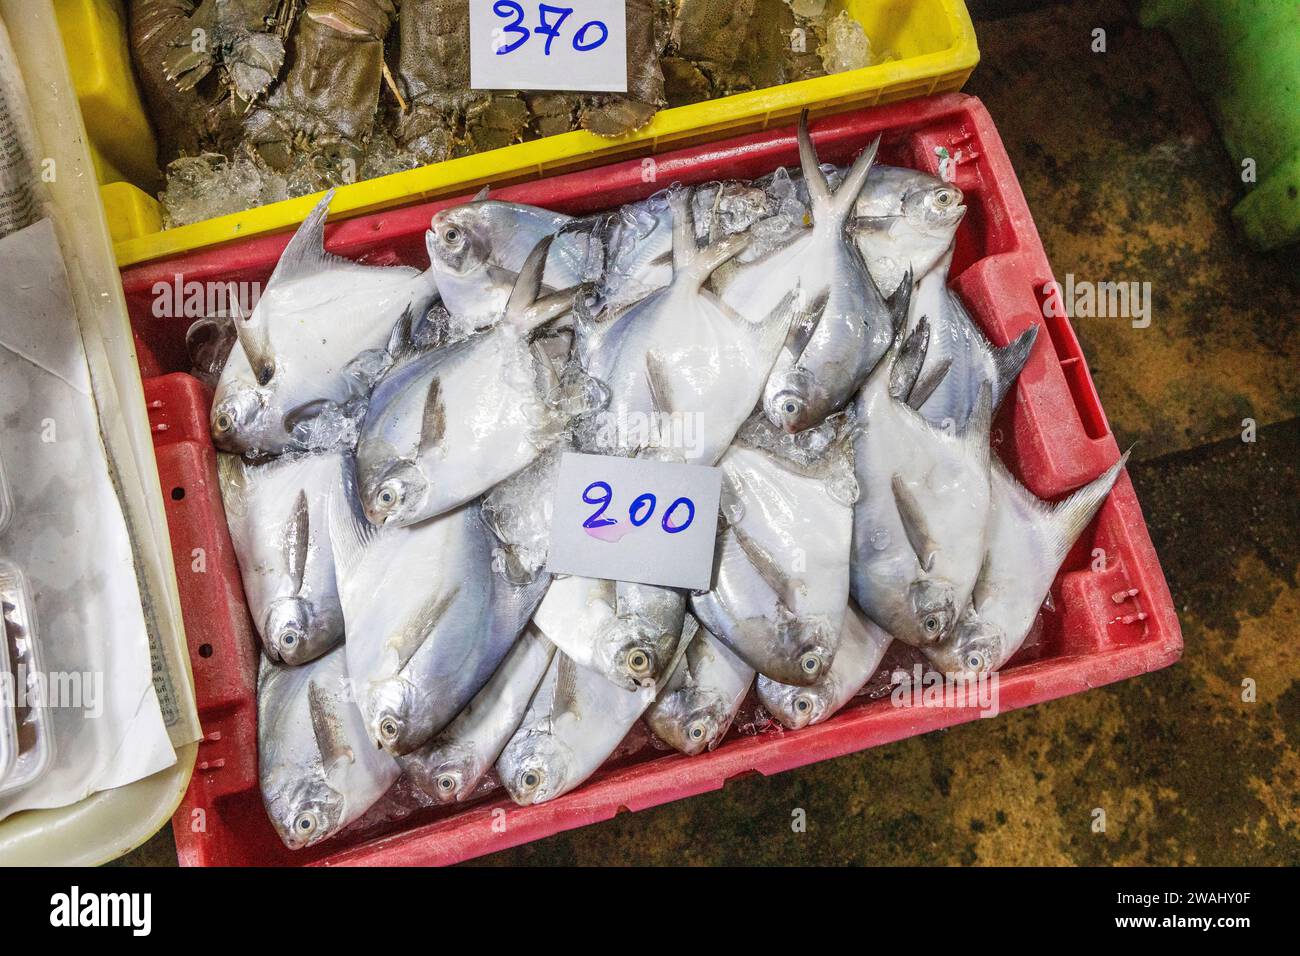 A red plastic box of fresh fish in Mae Klong Fresh Market, Thailand Stock Photo